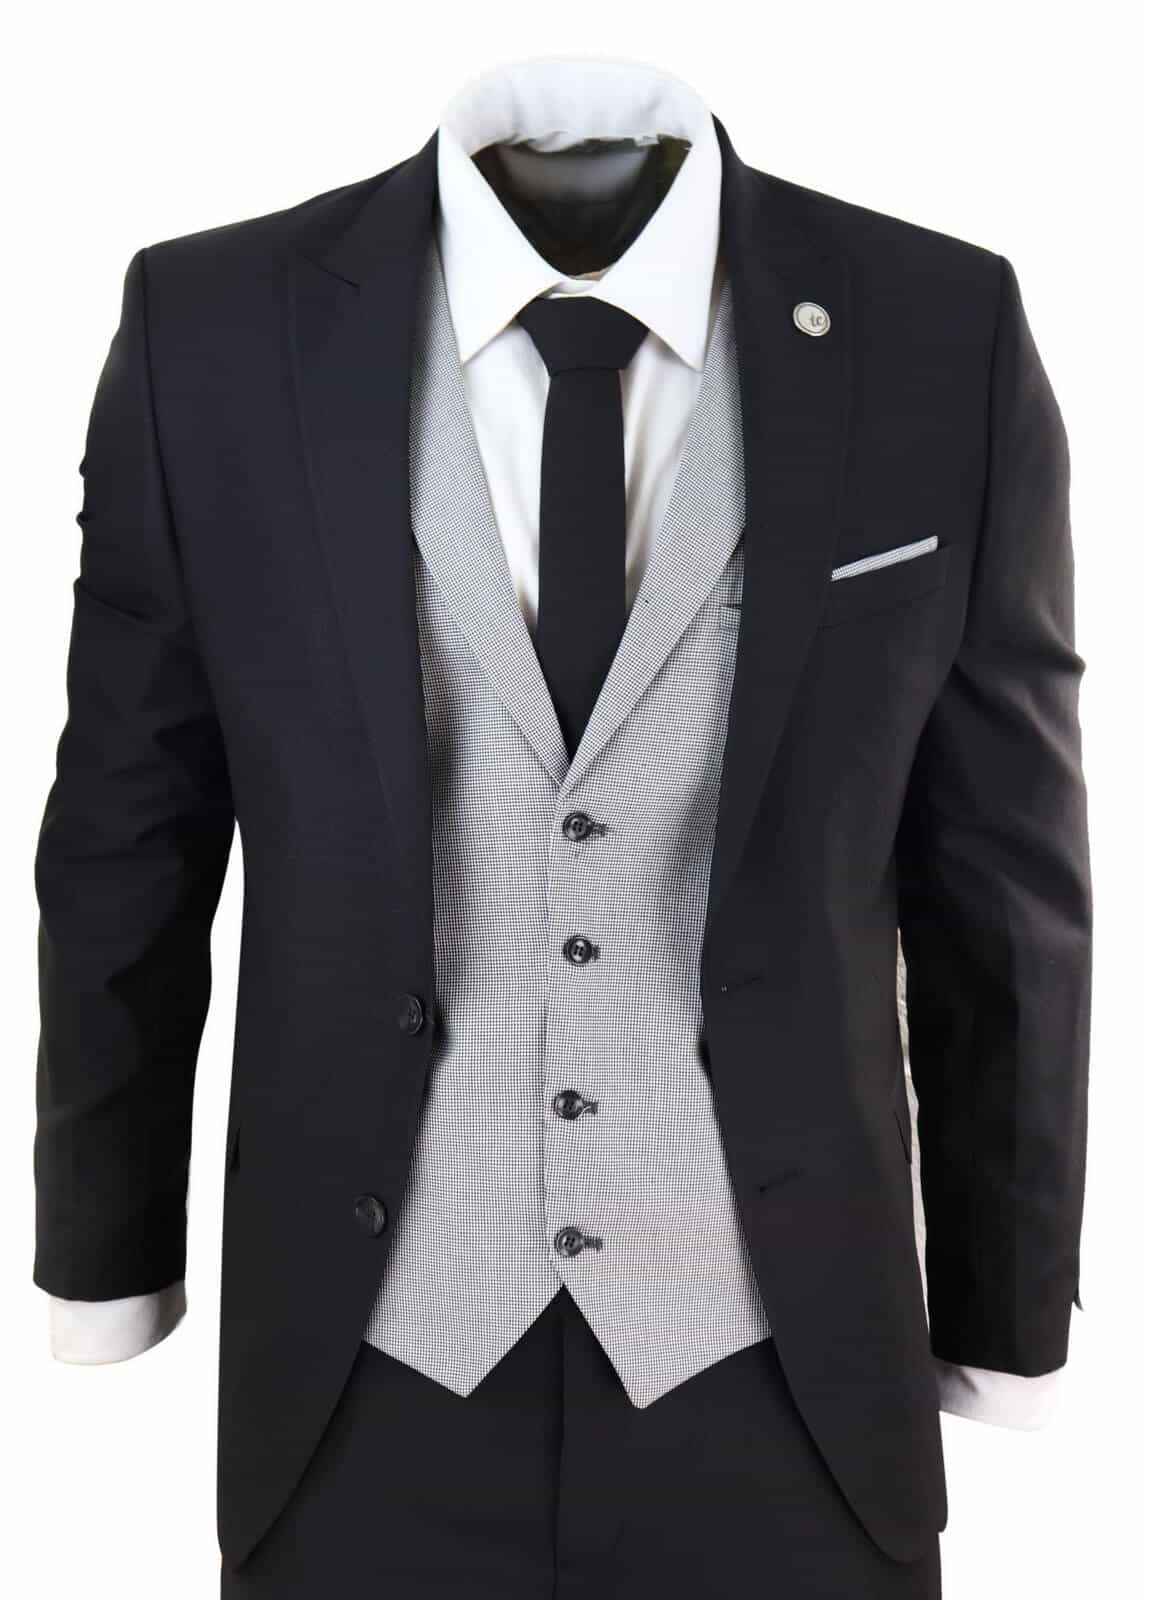 Mens Black 3 Piece Suit with Contrasting Grey Waistcoat: Buy Online